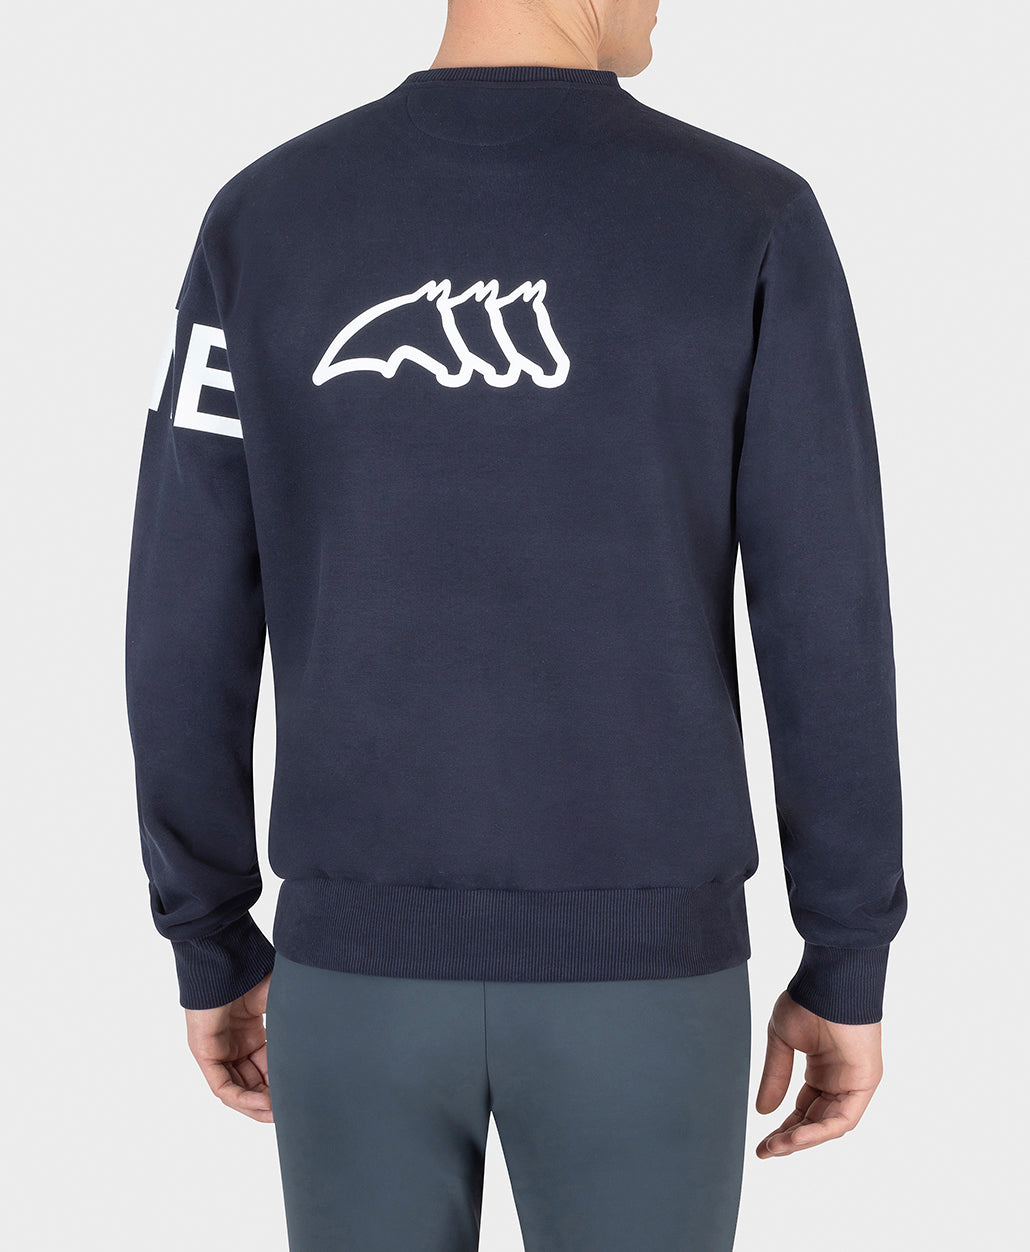 Equiline Mens Calic Navy Sweatshirt